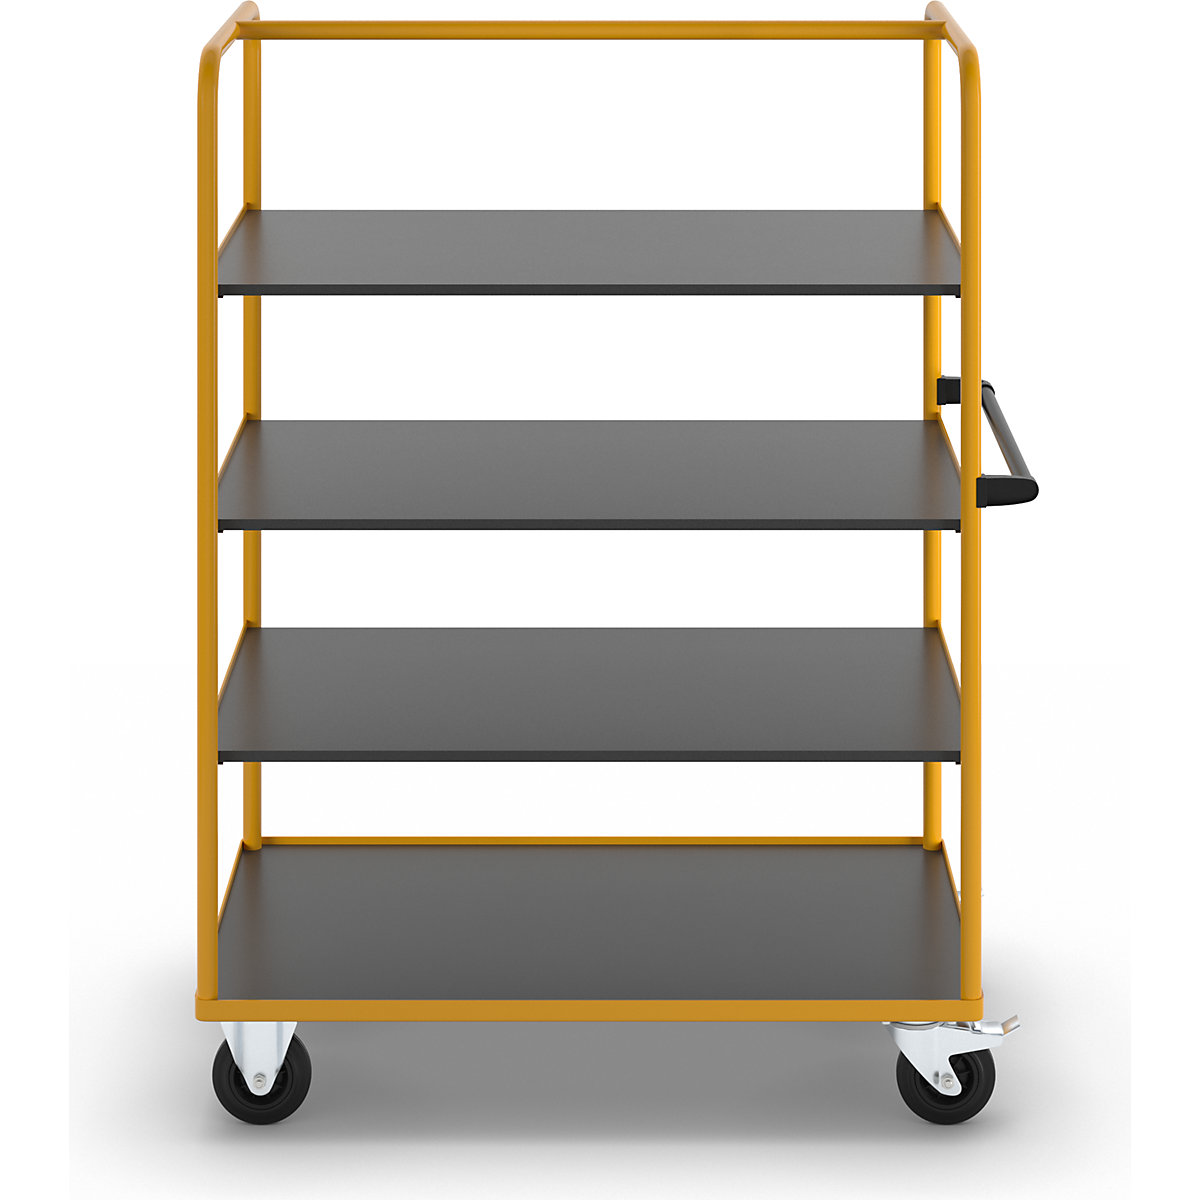 Professional shelf and platform truck (Product illustration 16)-15